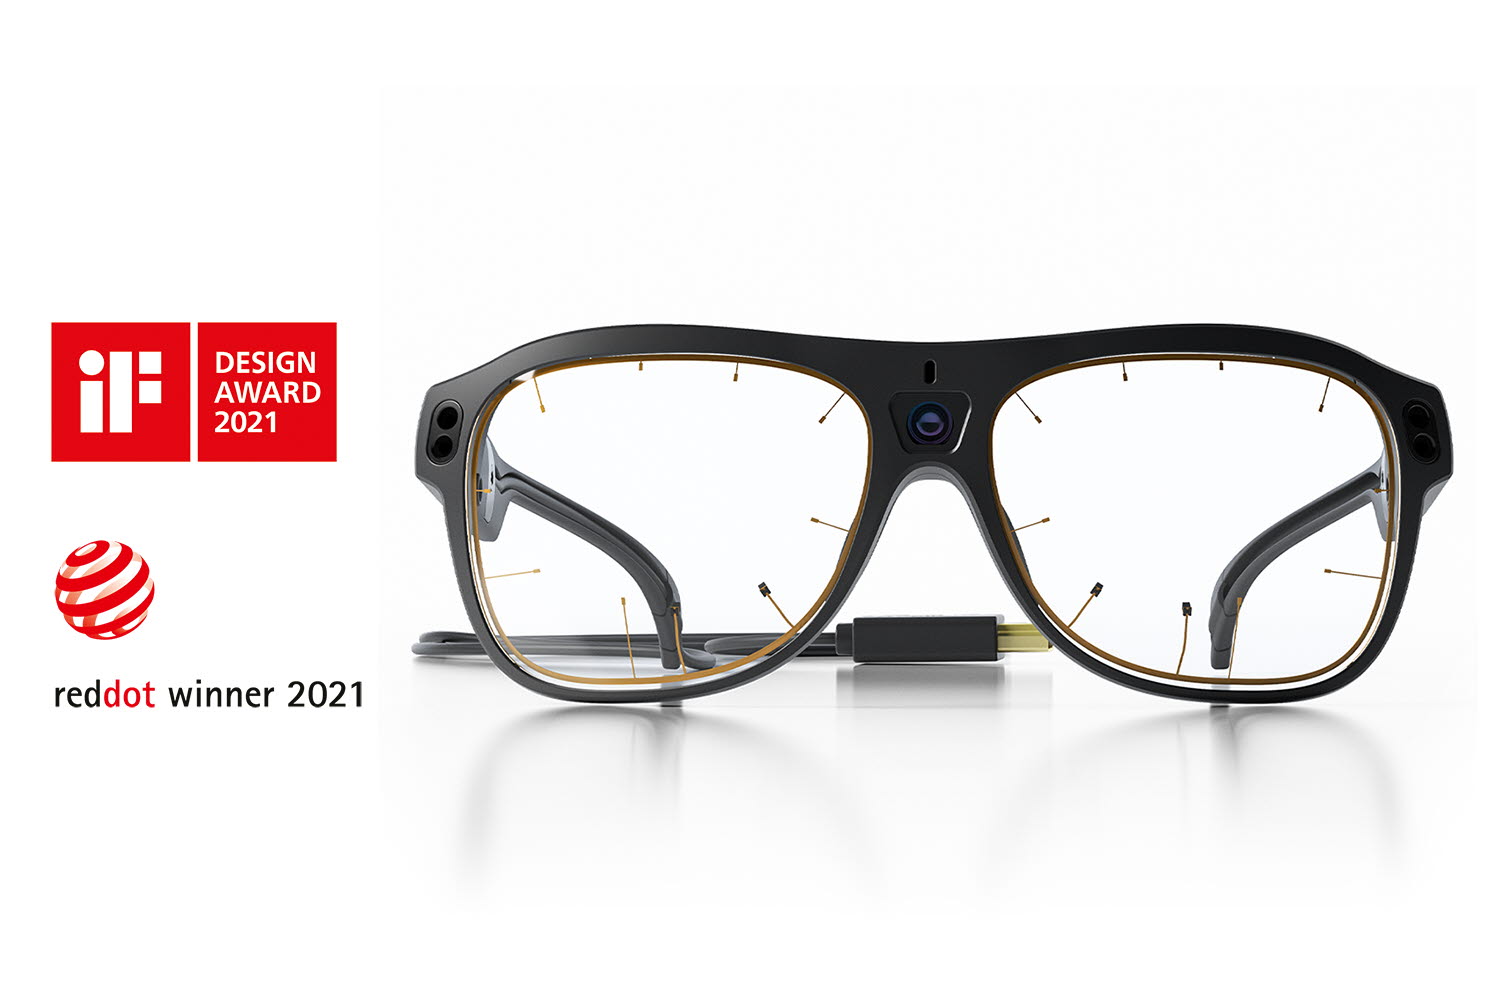 Tobii Pro Glasses 3 - IF Design award and Reddot Winner 2021